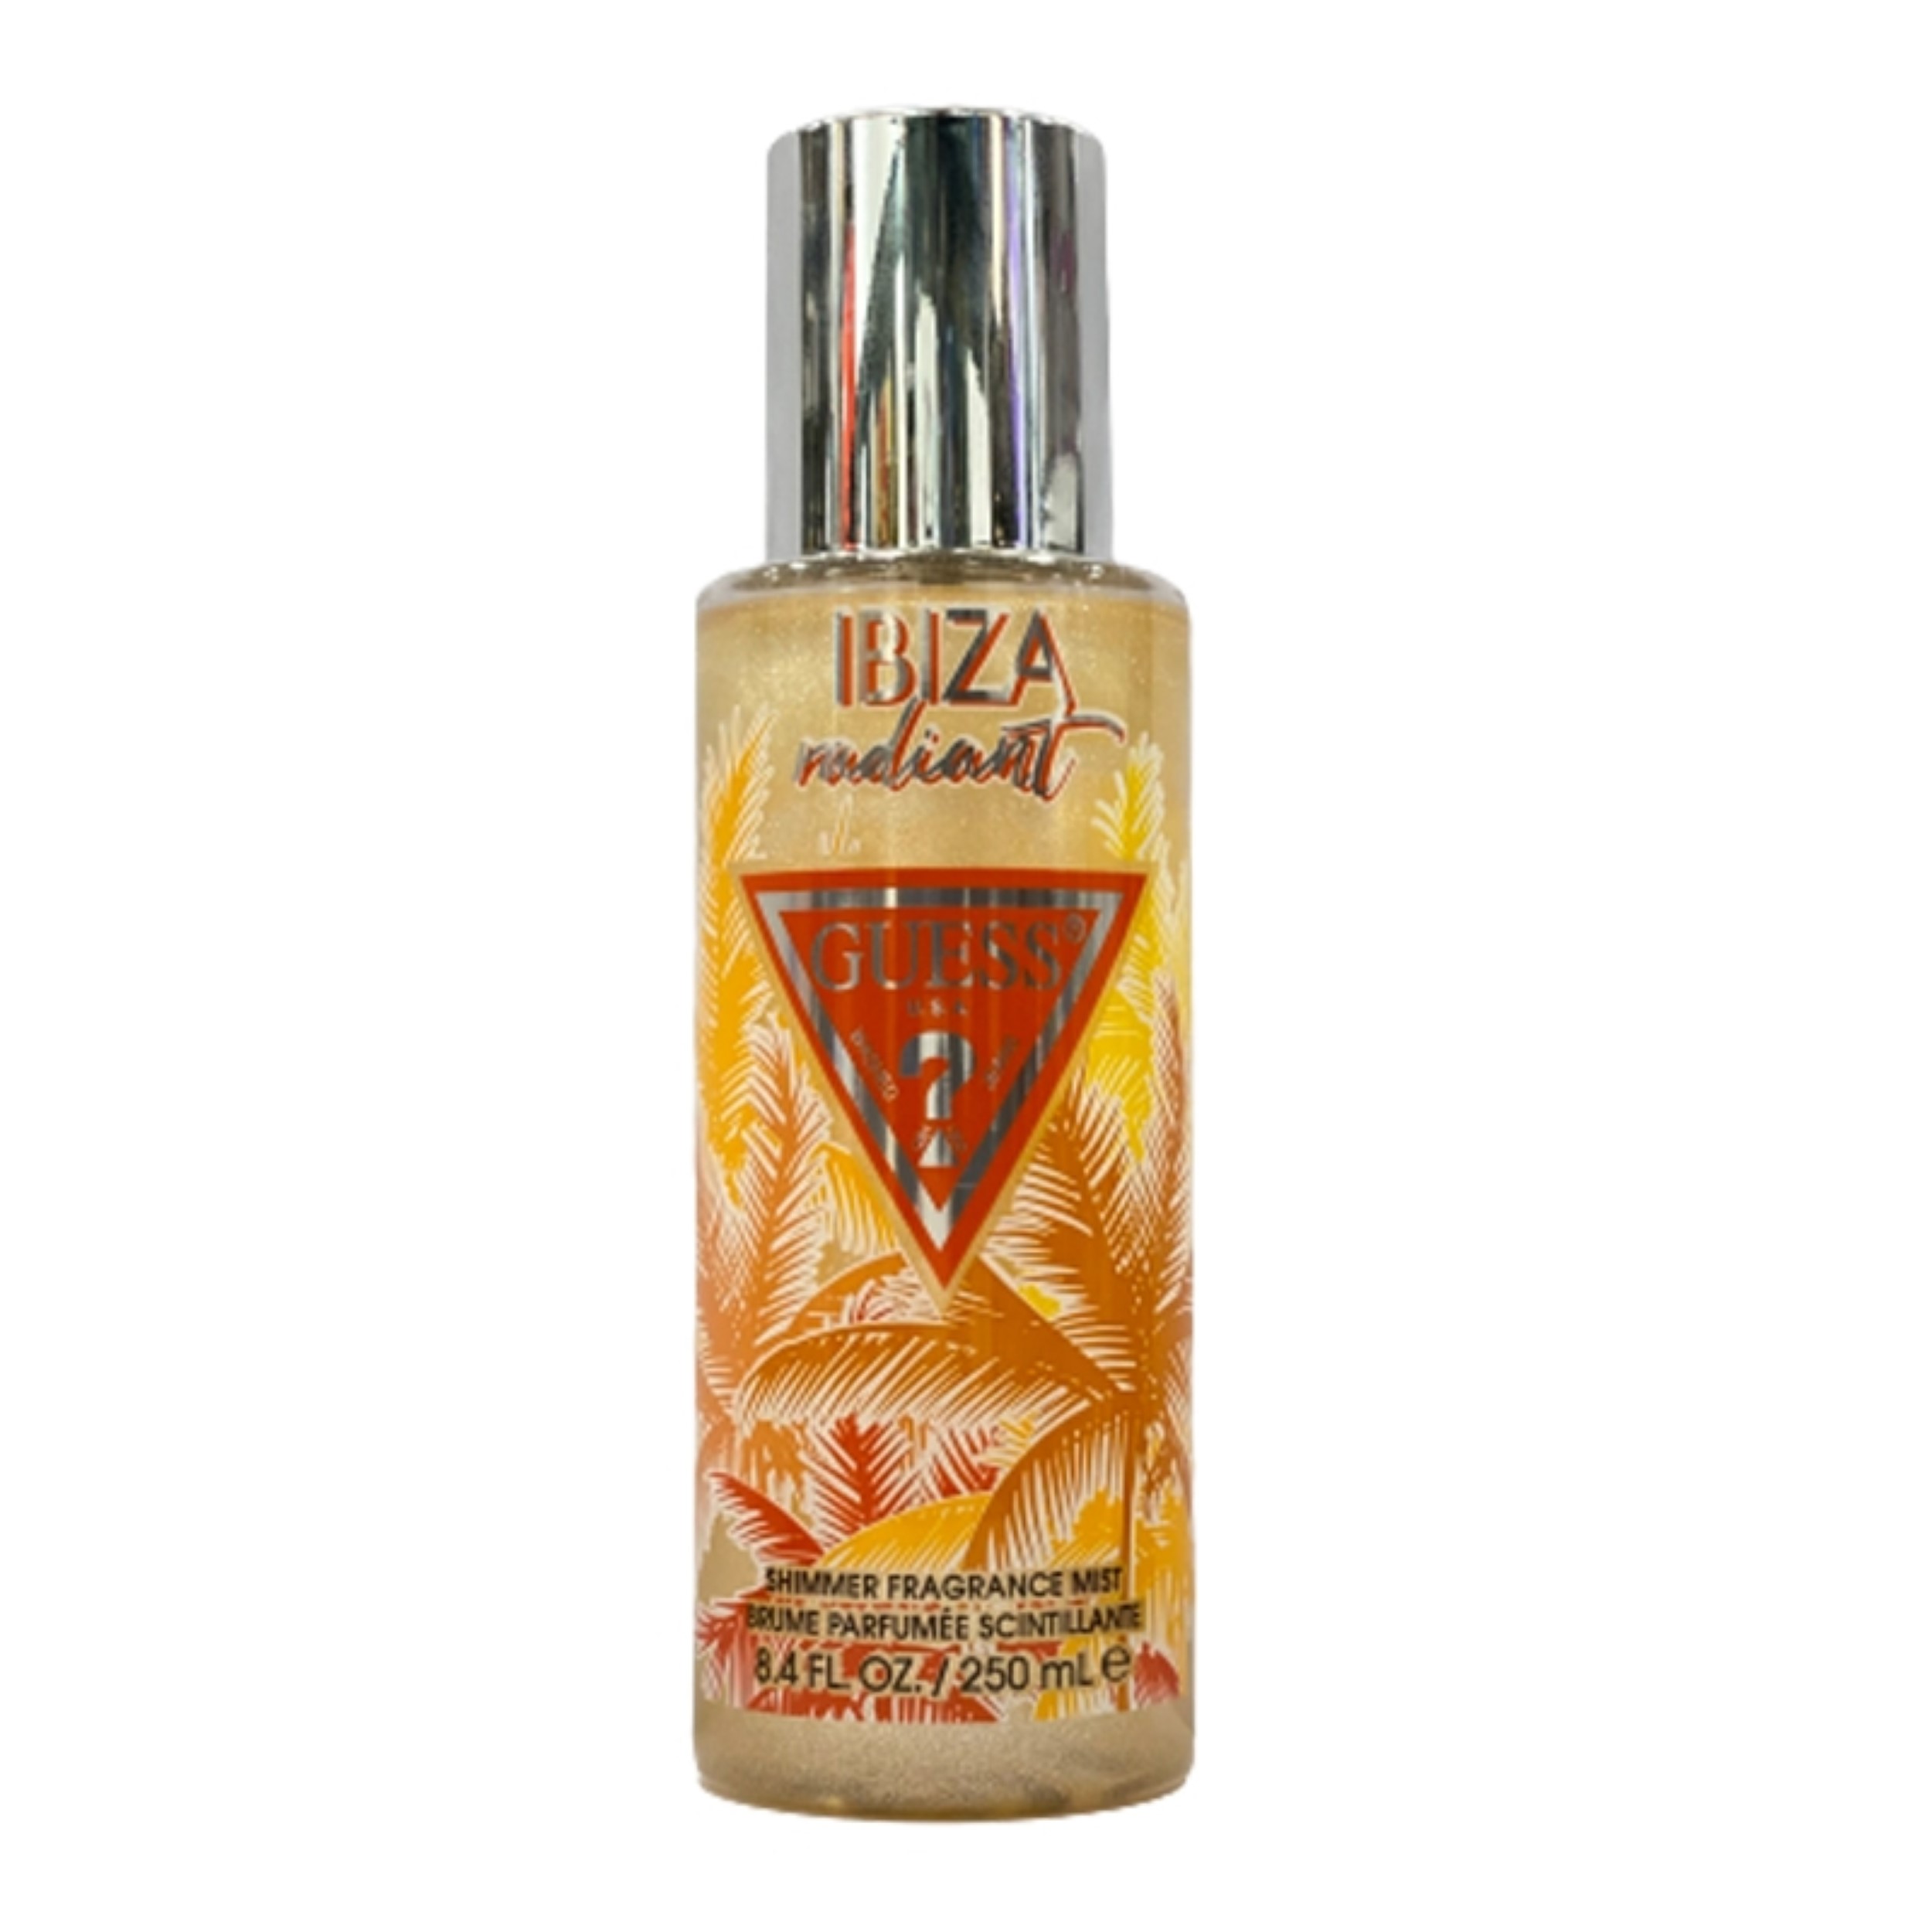 Guess Ibiza Radiant Shimmer Fragrance Mist